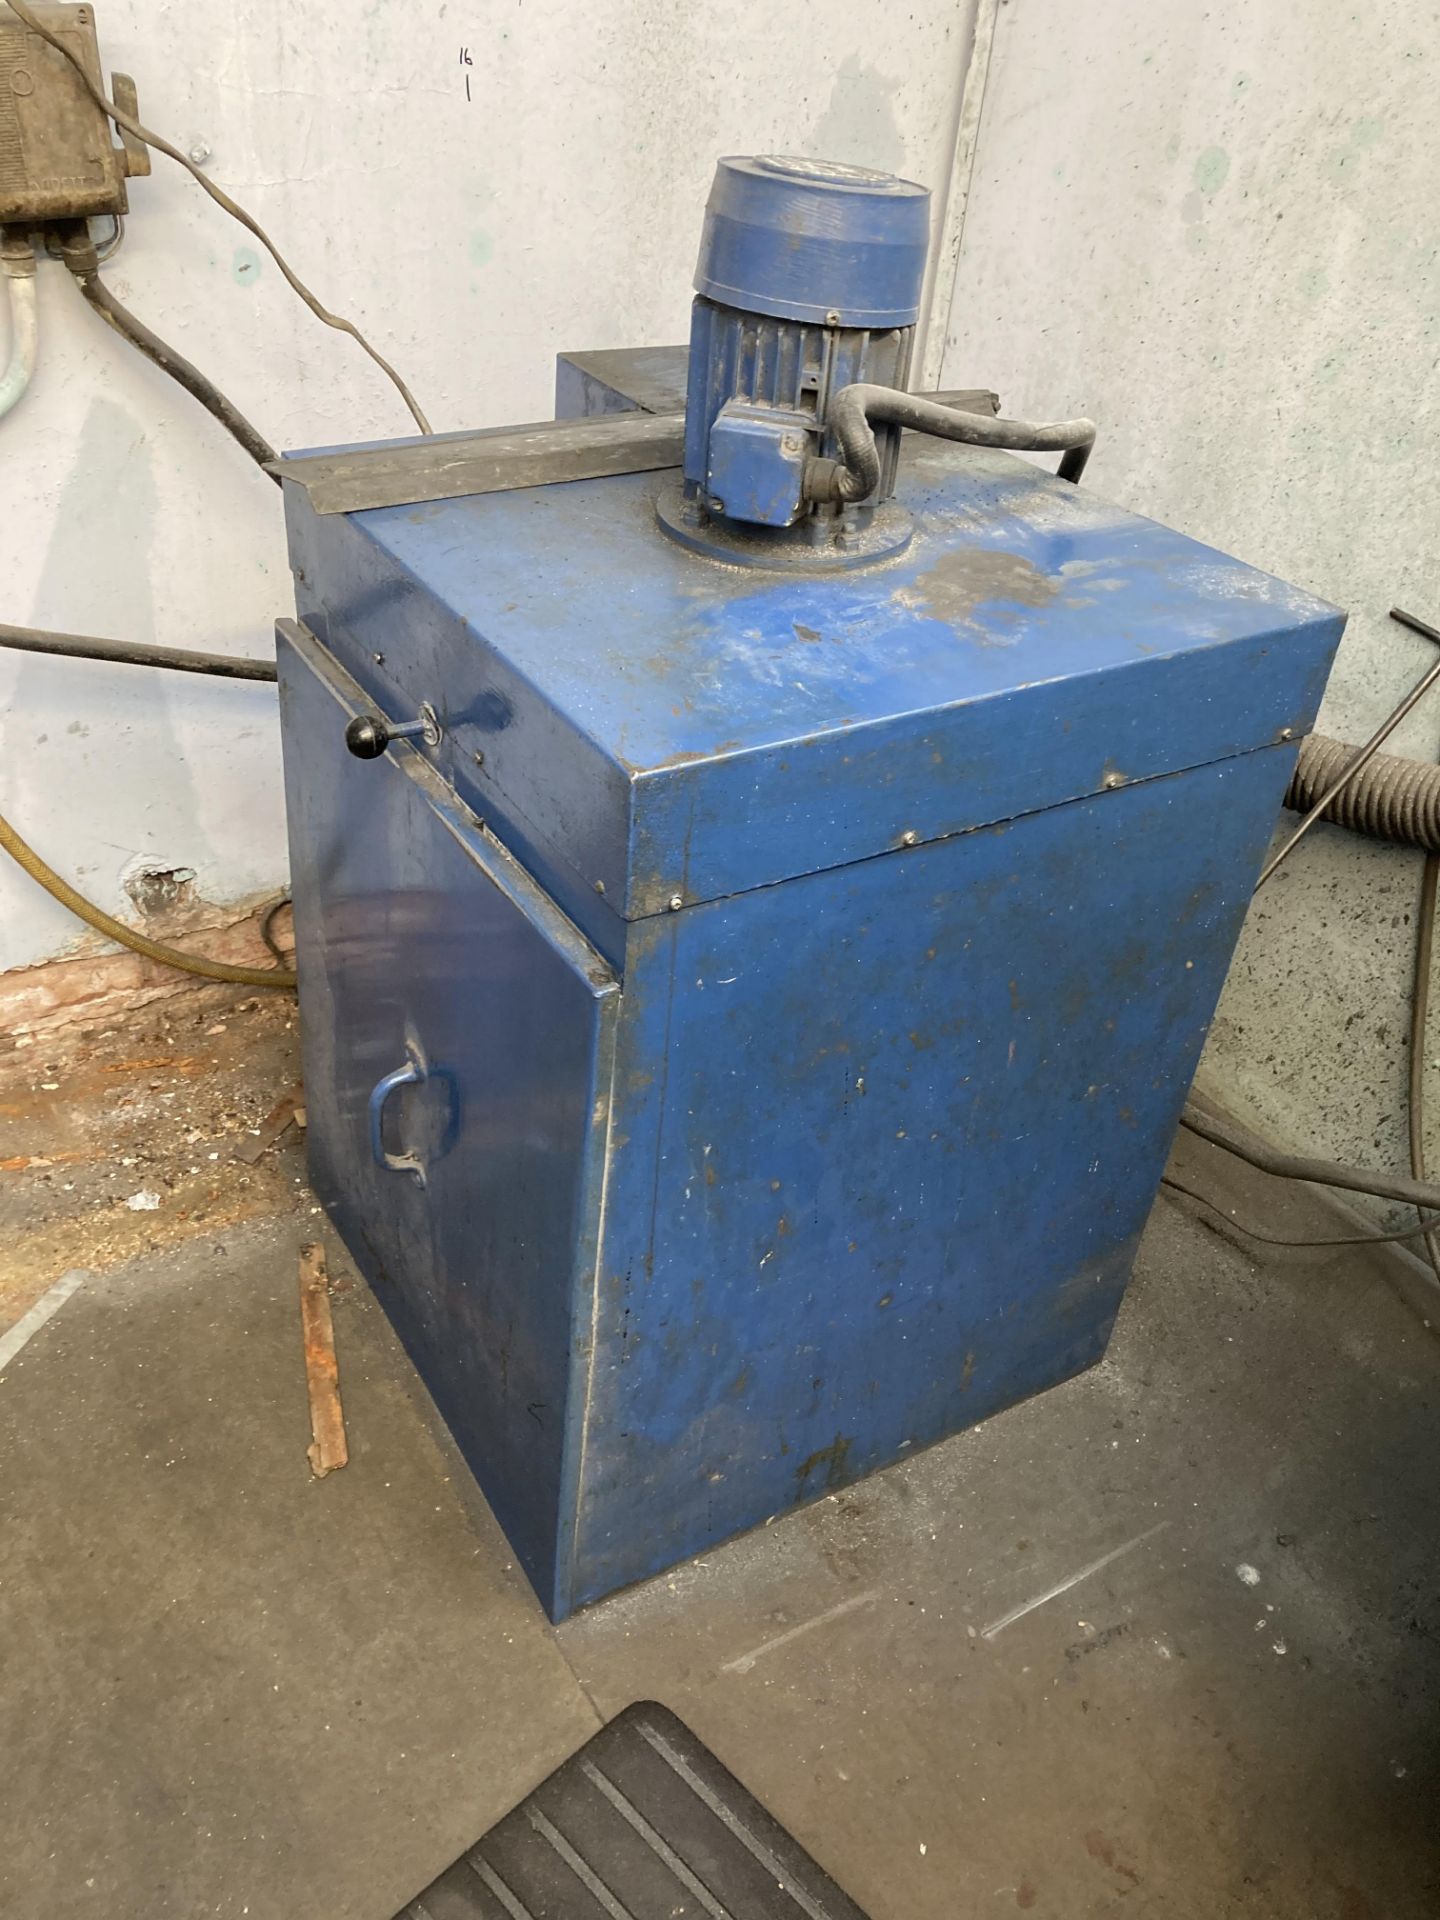 Jones & Shipman 540P horizontal surface grinding machine, Serial No. B099698, table size 26" x 6" - Image 5 of 8